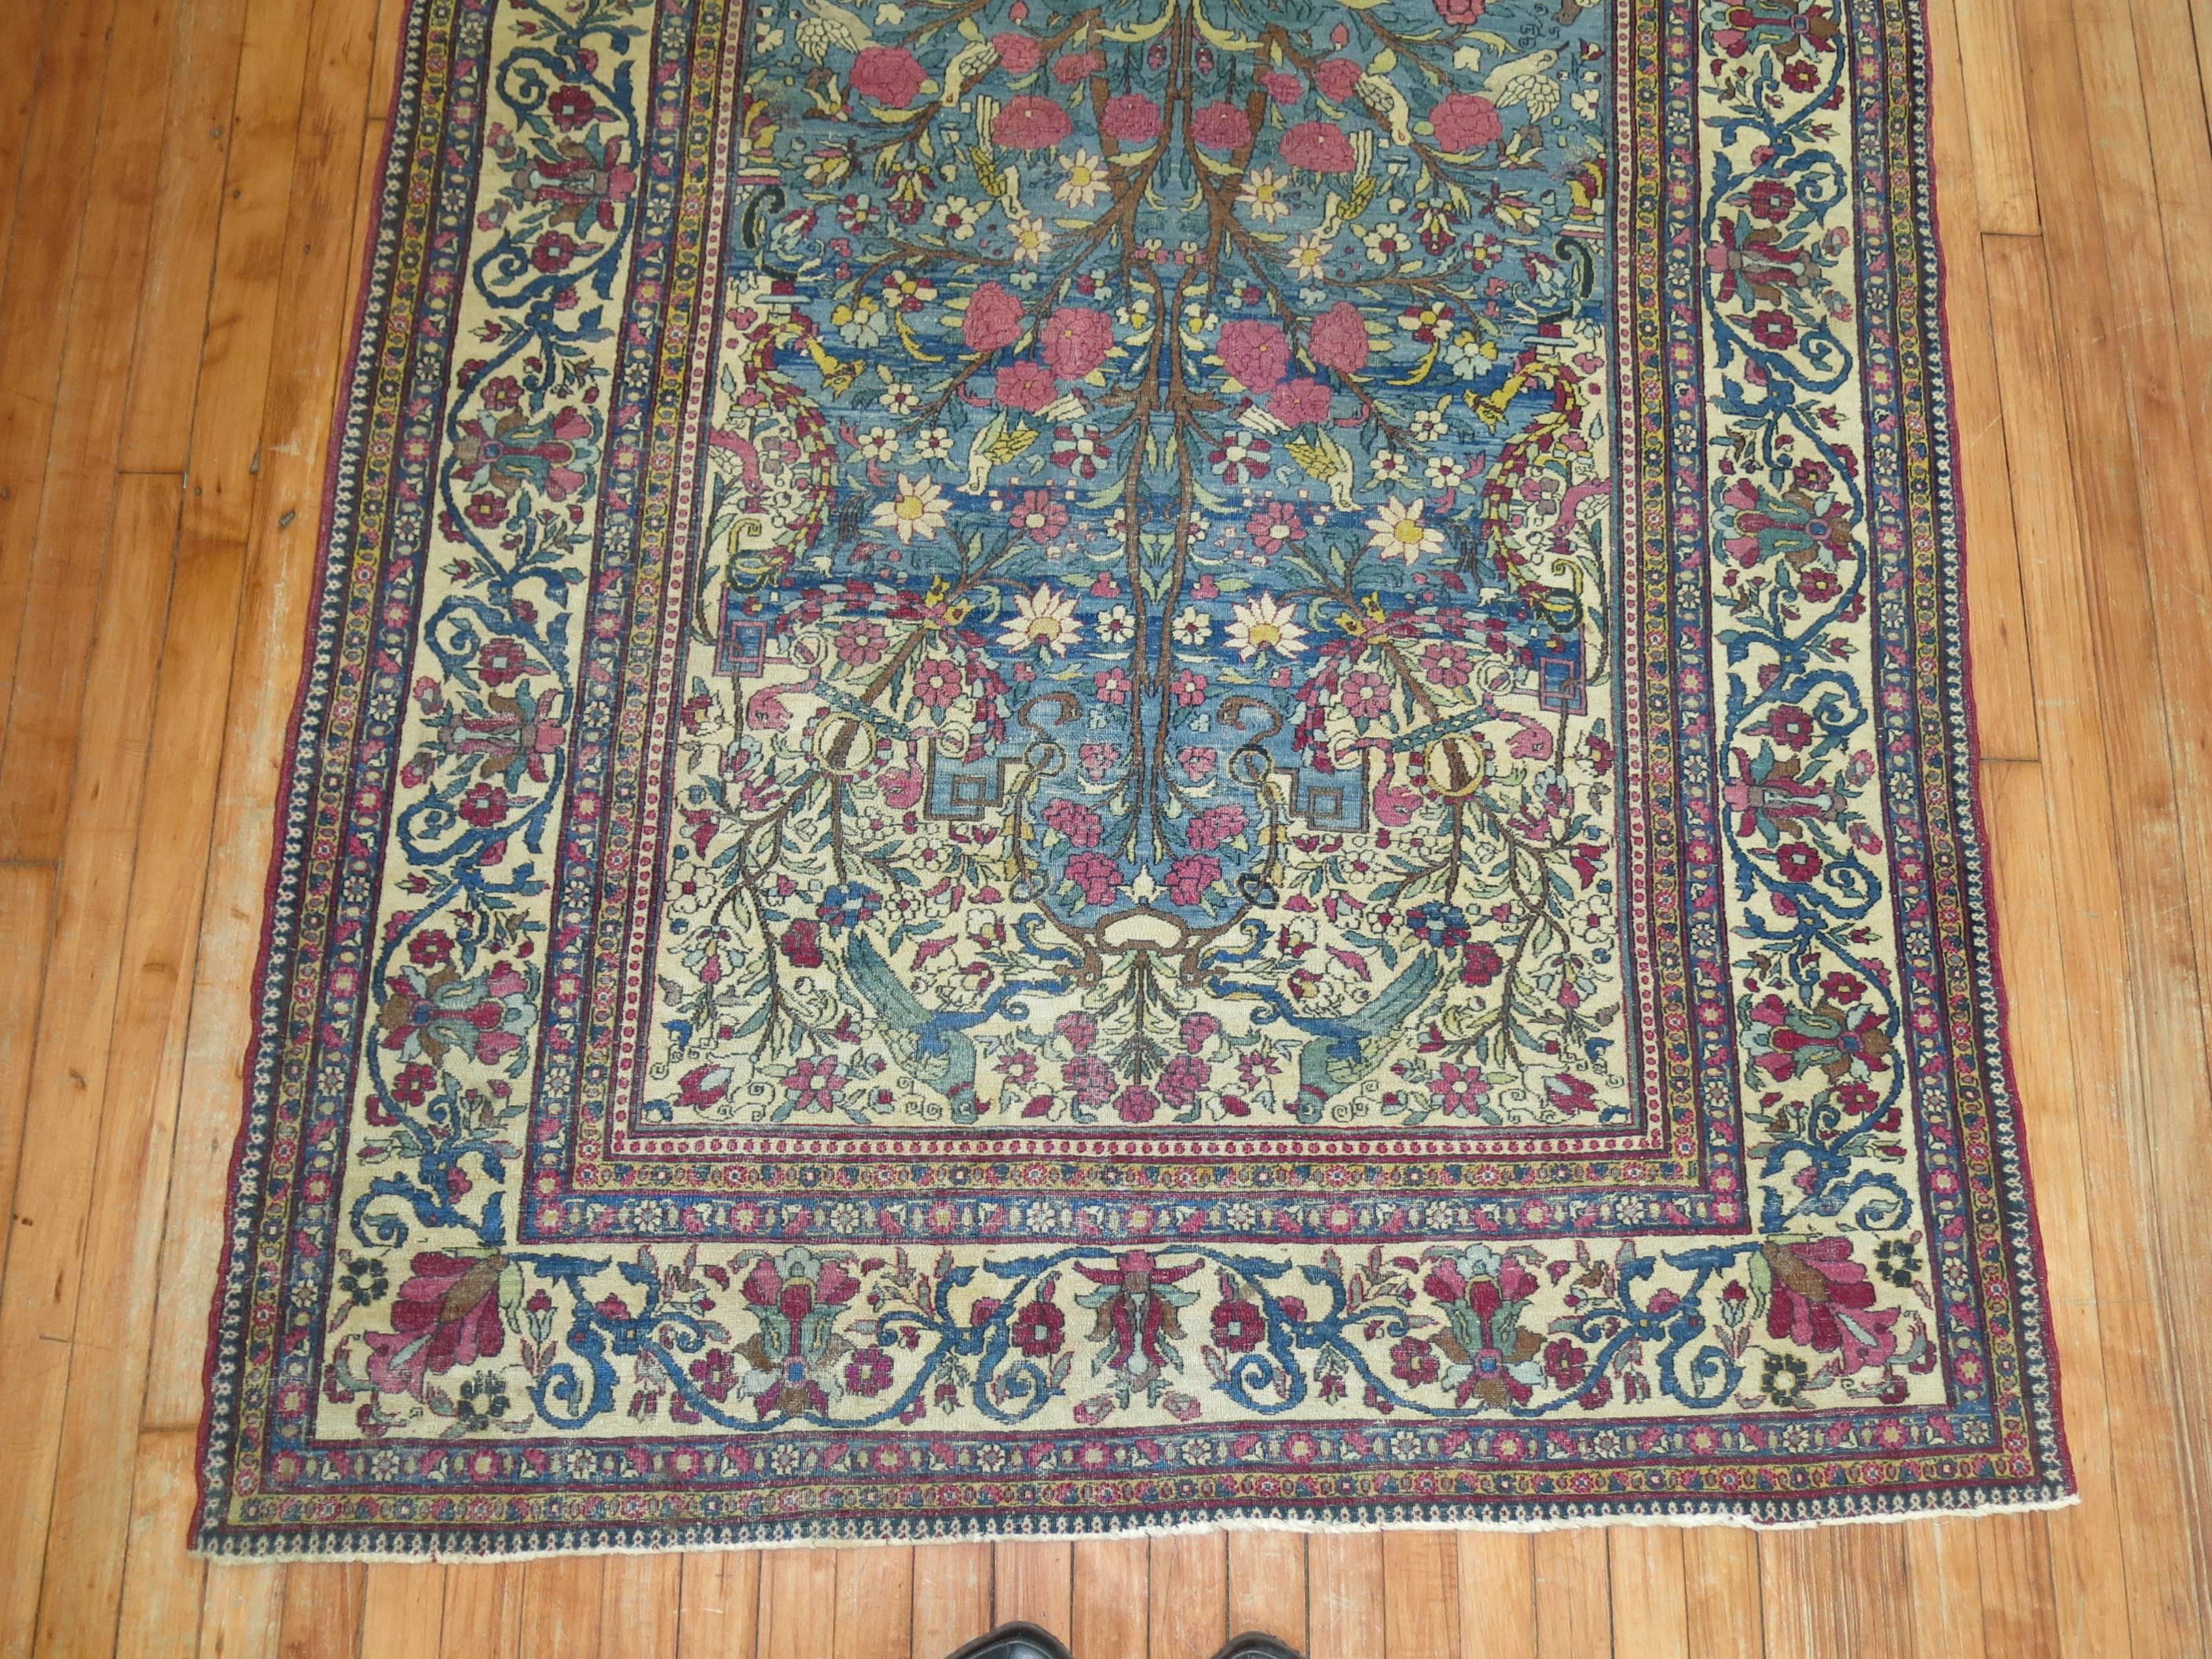 Hand-Woven Pictorial Persian Isfahan Prayer Carpet